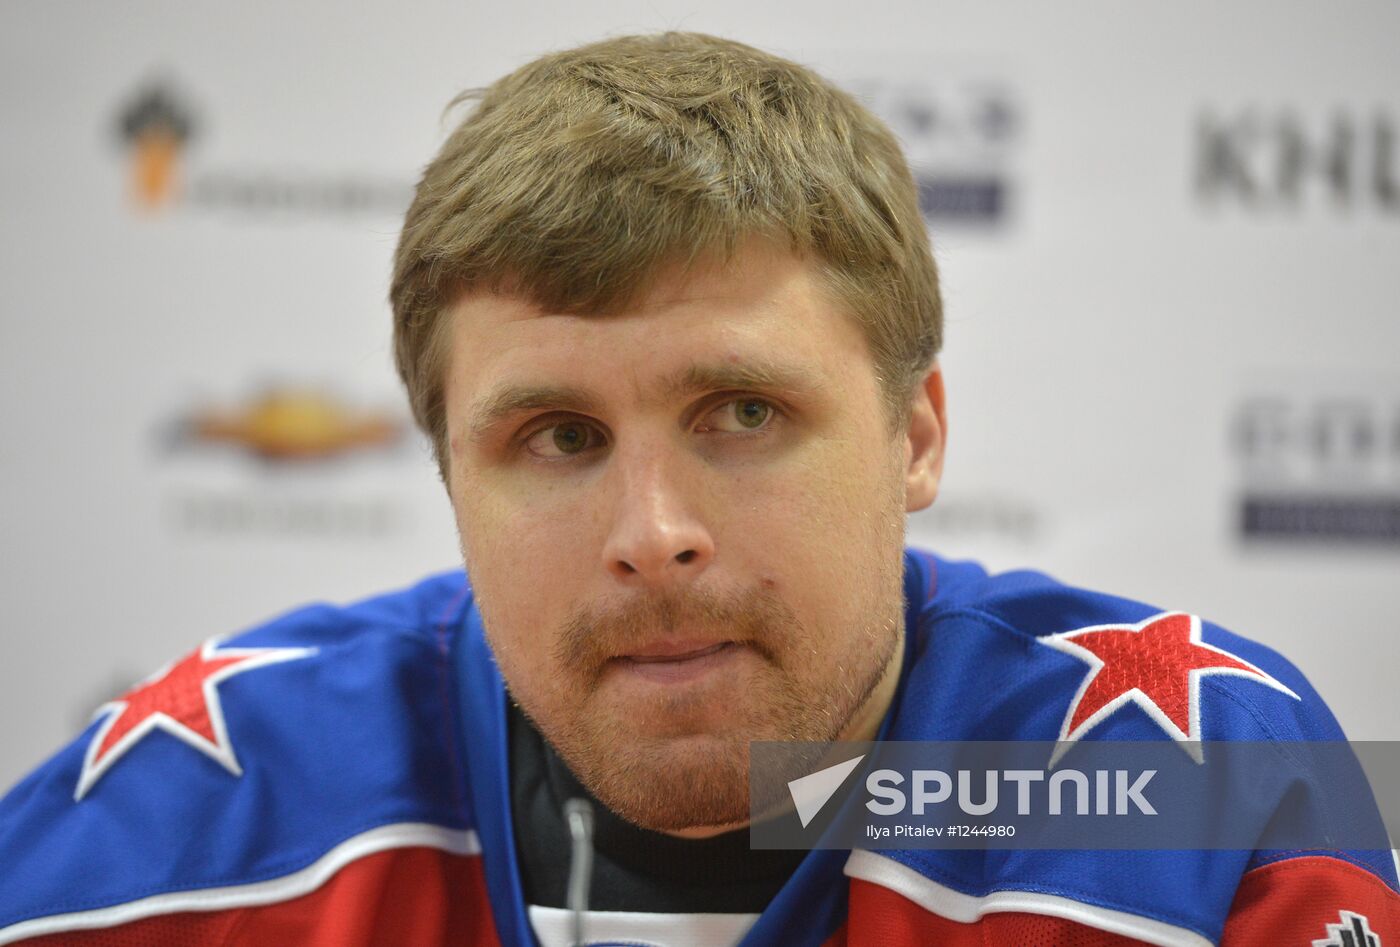 Ice Hockey. New HC CSKA players introduced